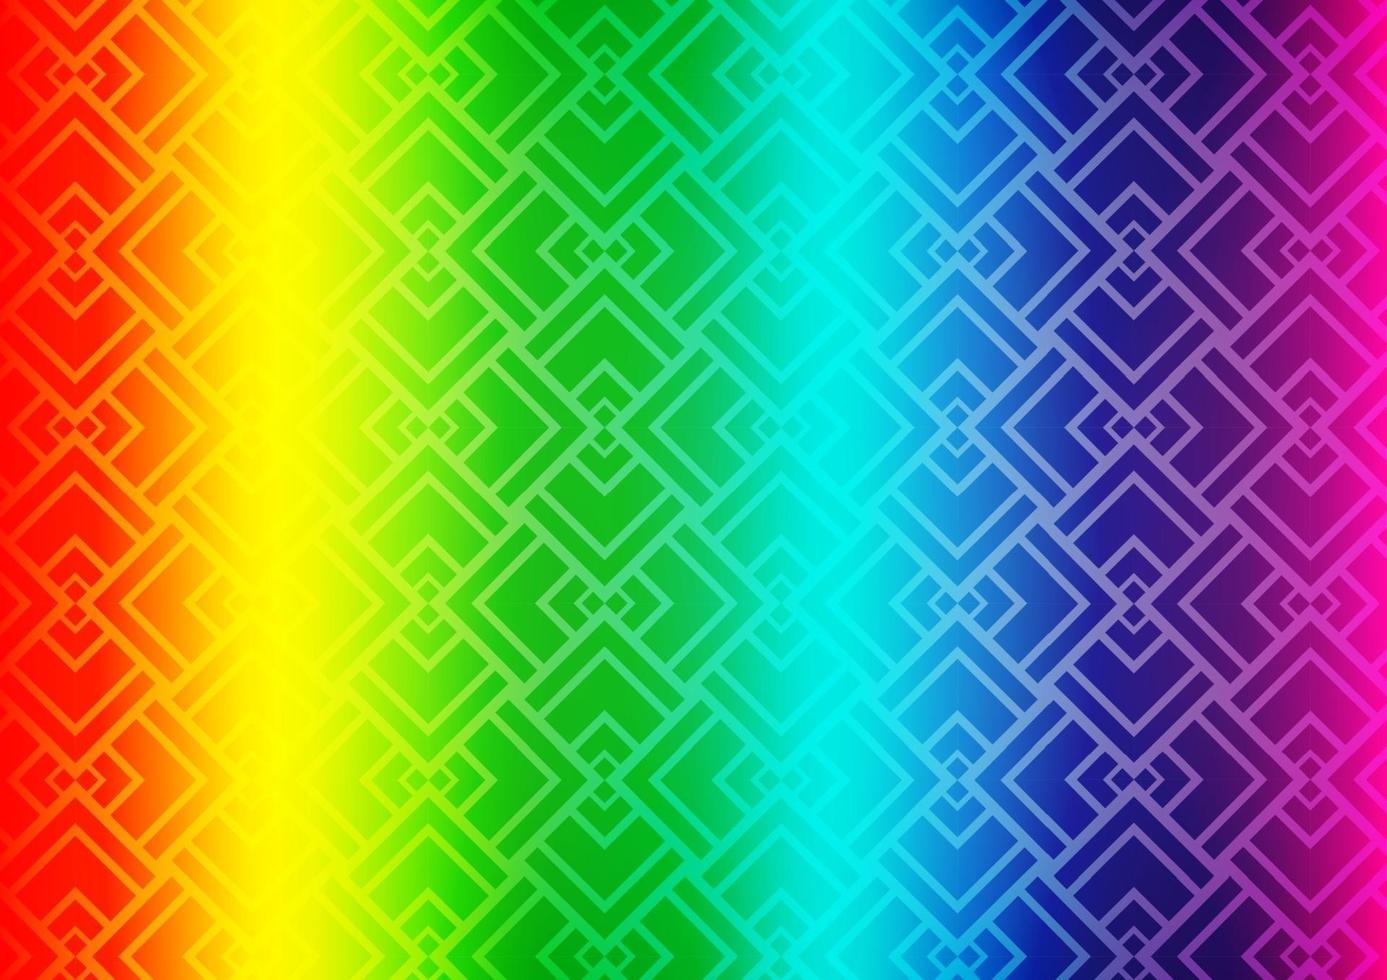 luz multicolorida, modelo de vetor de arco-íris com varas repetidas.